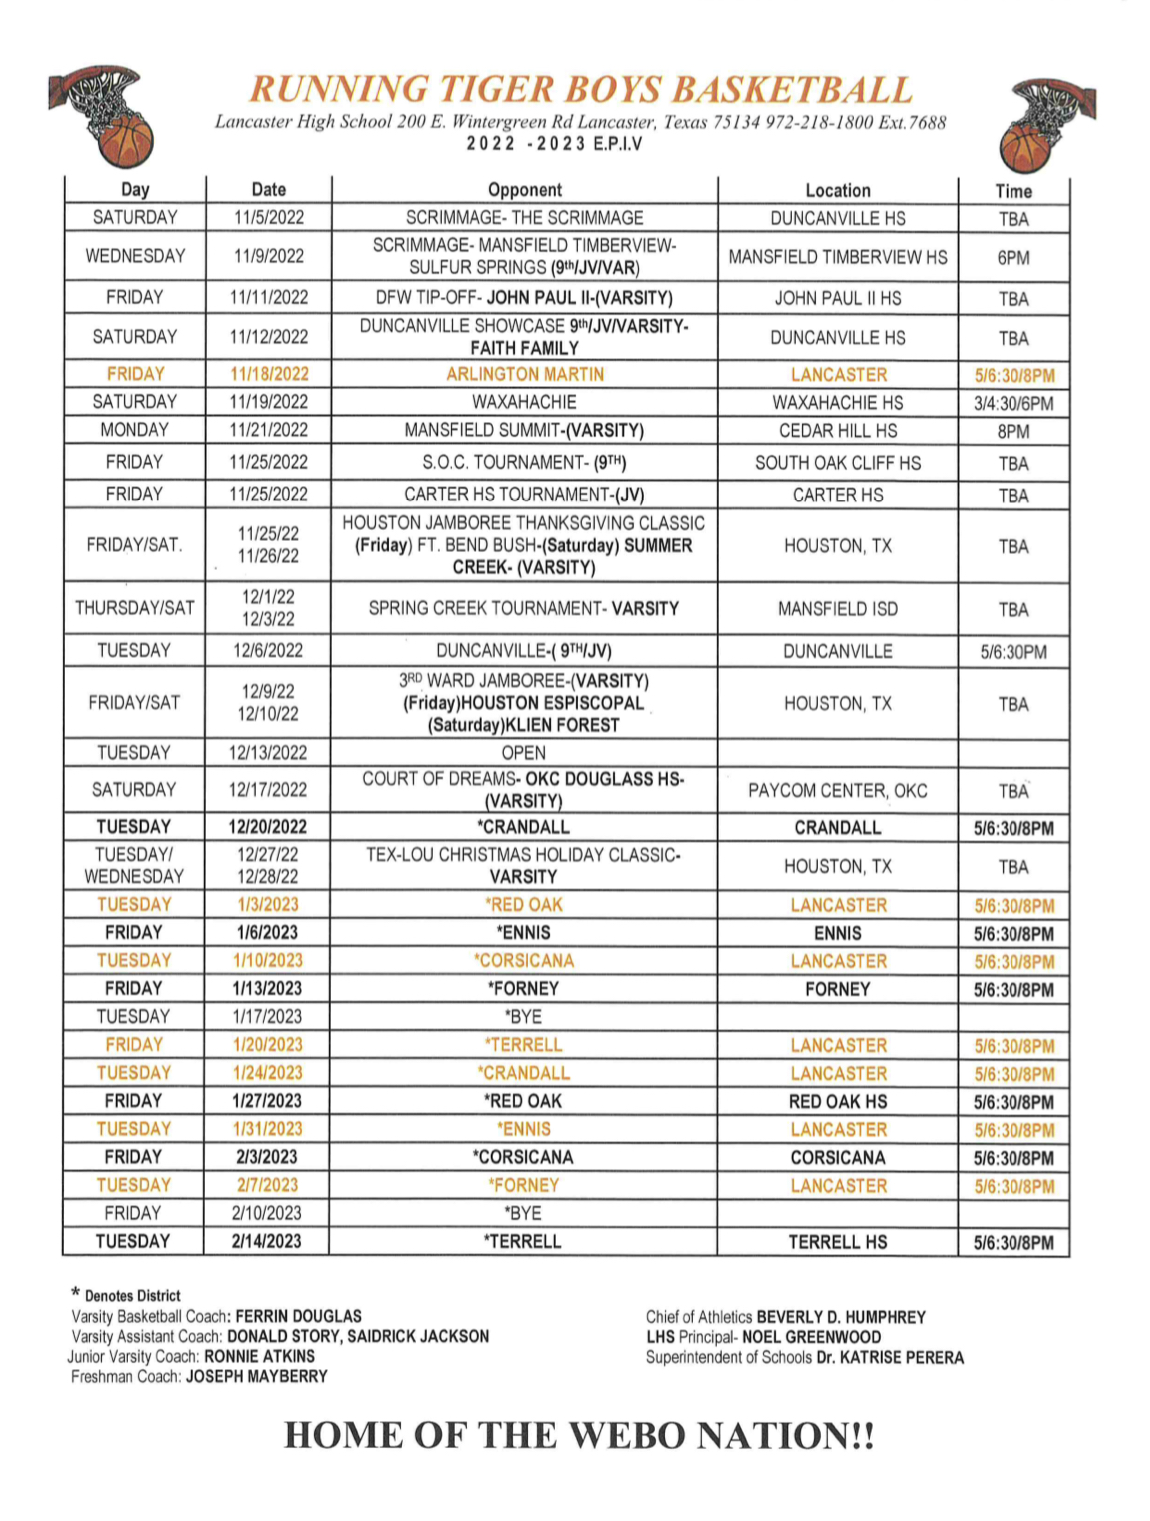 Lancaster Tigers BB Schedule